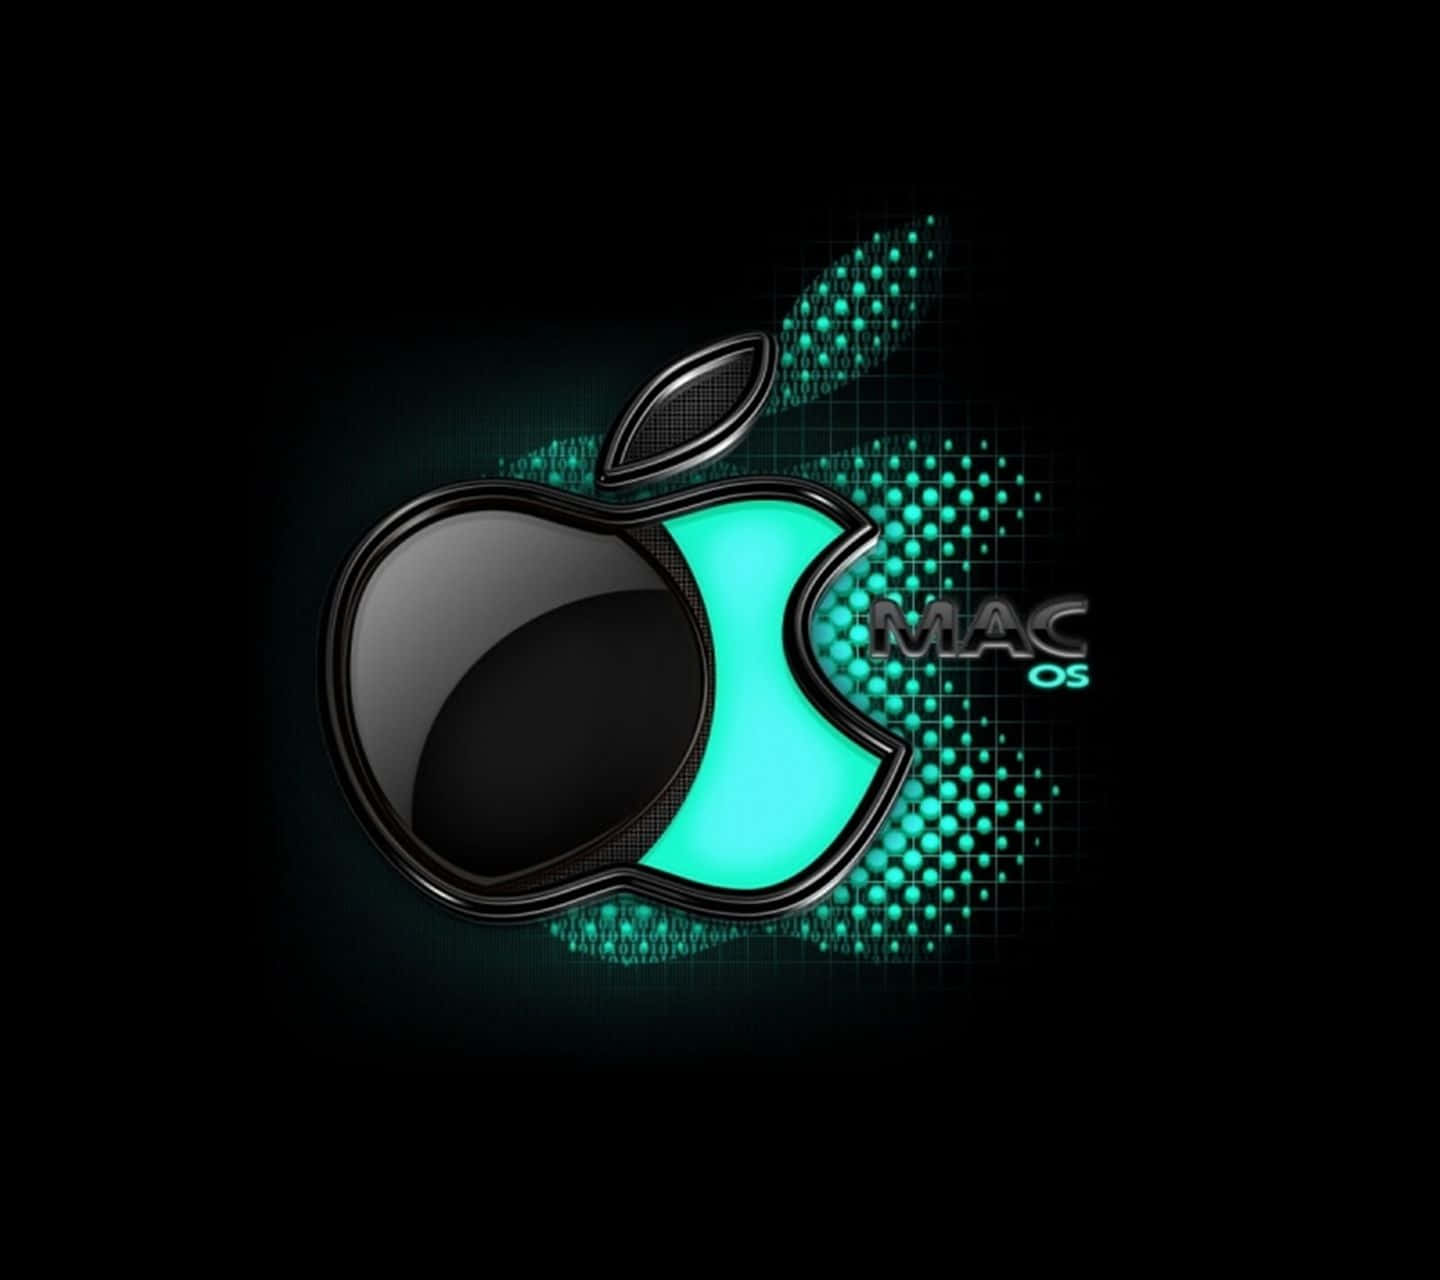 Black And Teal Cool Mac Logo Wallpaper